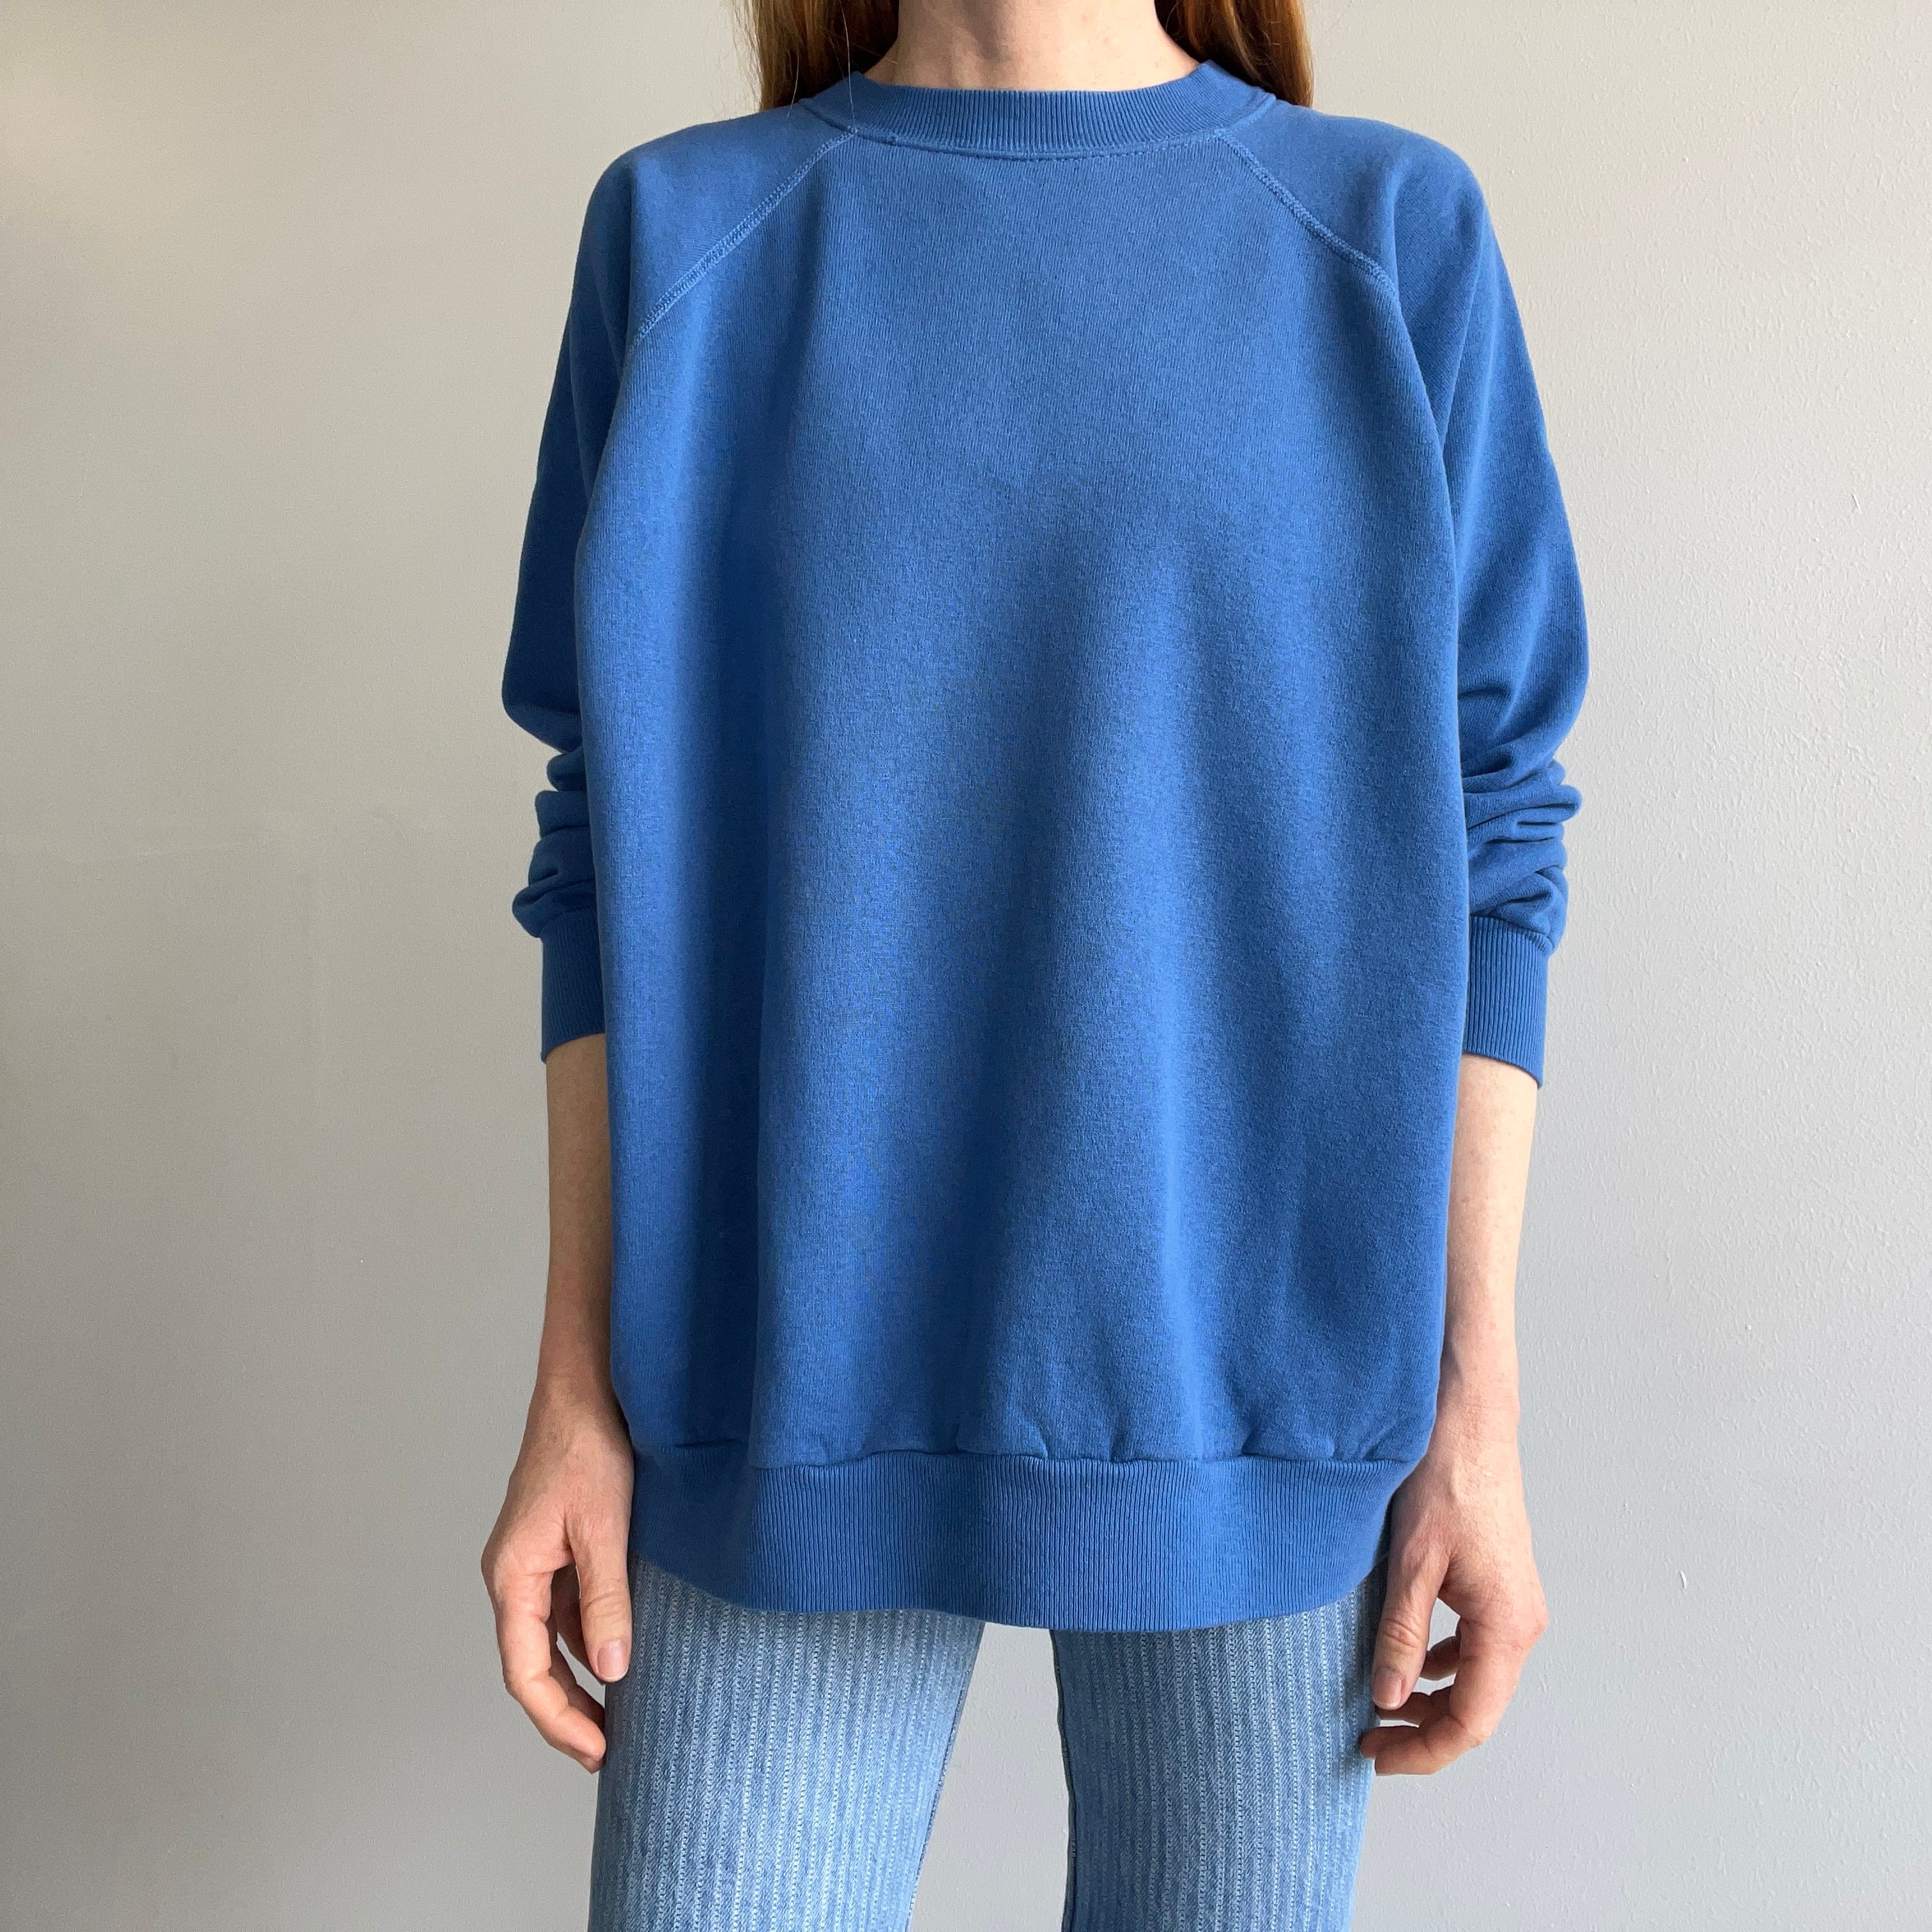 1980s Relaxed Fit Blank Blue Raglan Sweatshirt